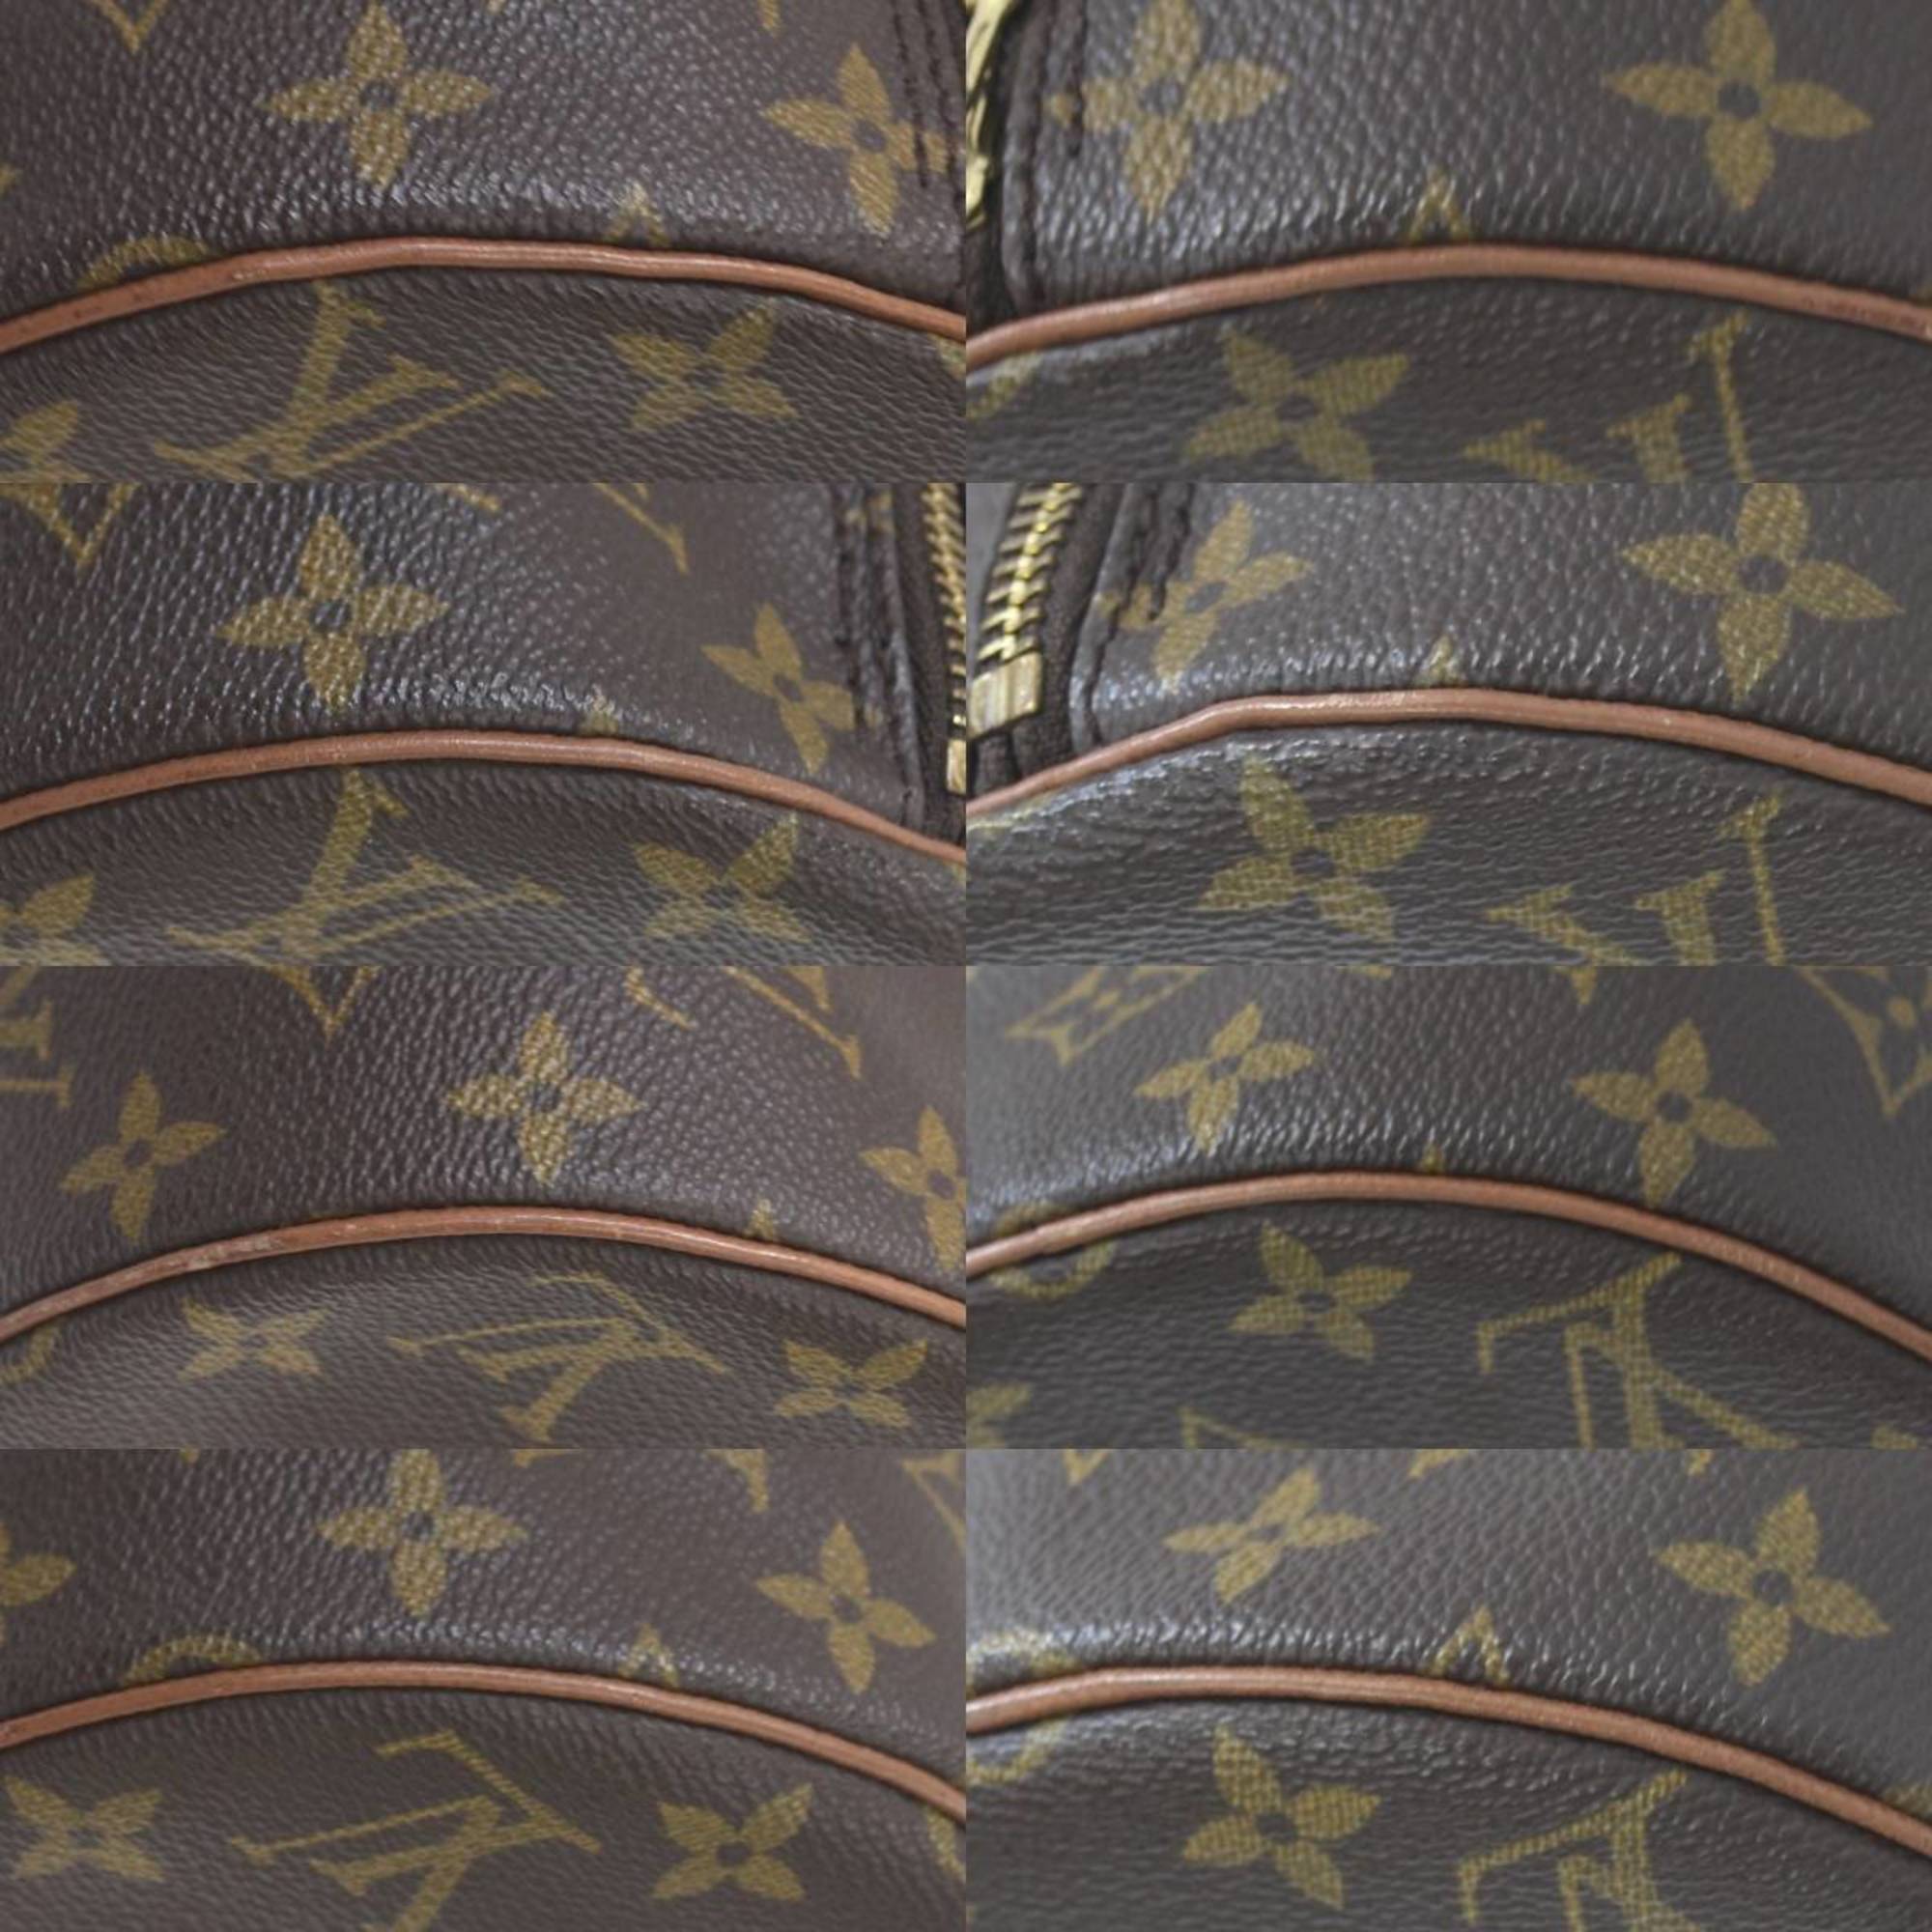 LOUIS VUITTON Louis Vuitton Papillon 30 Handbag Monogram M51365 TH1901